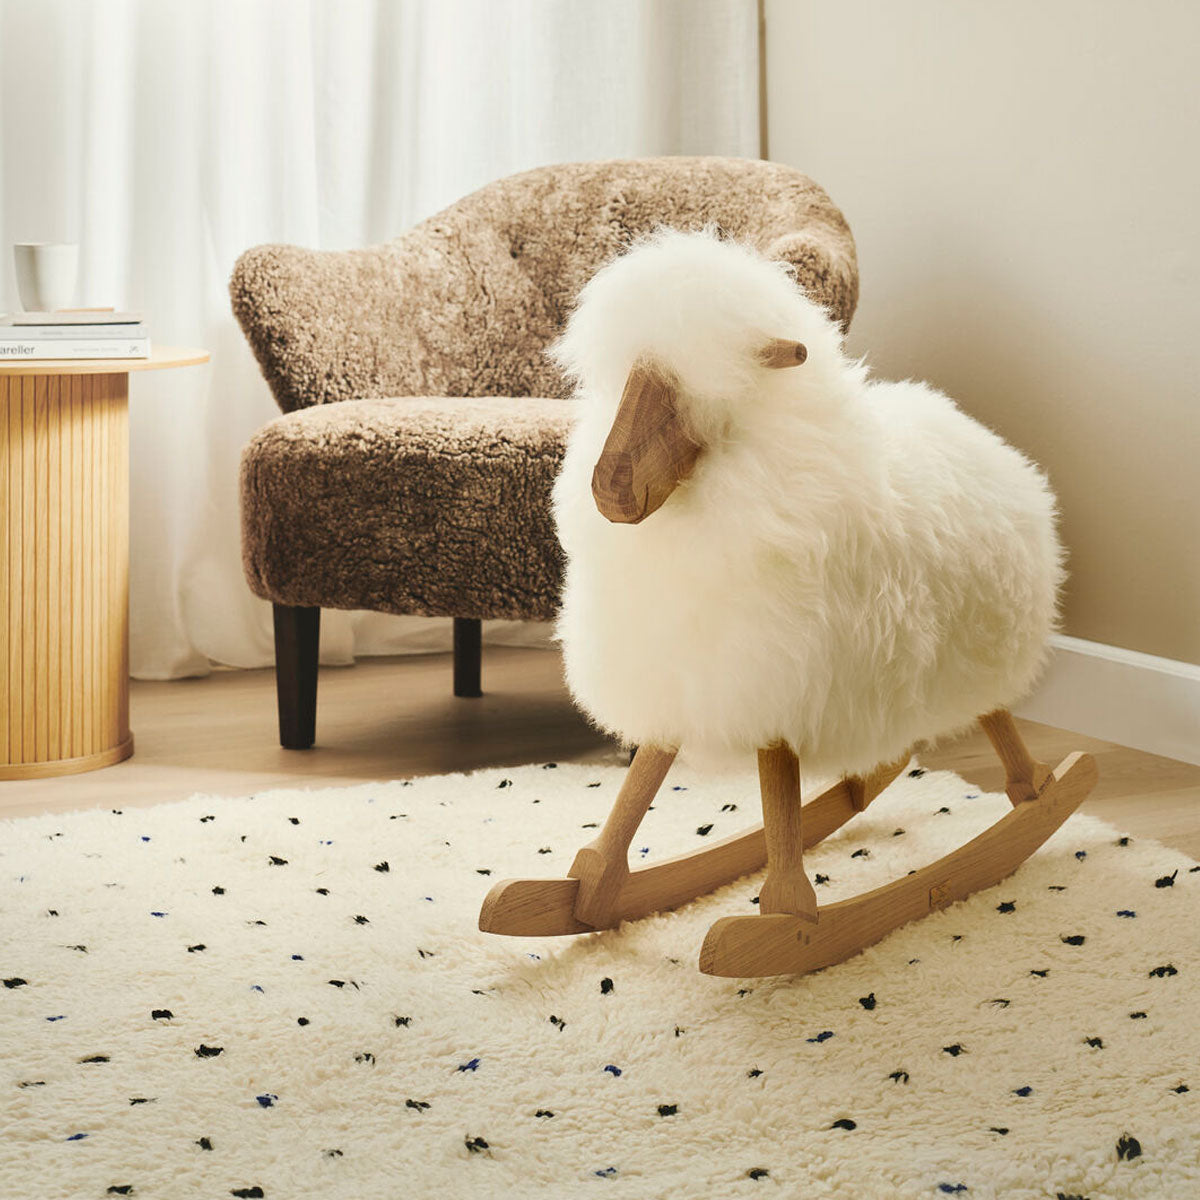 The Rocking Sheep │ Povl Kjer Design │ Made in Denmark │ Natural Grey Long Wool │ Large